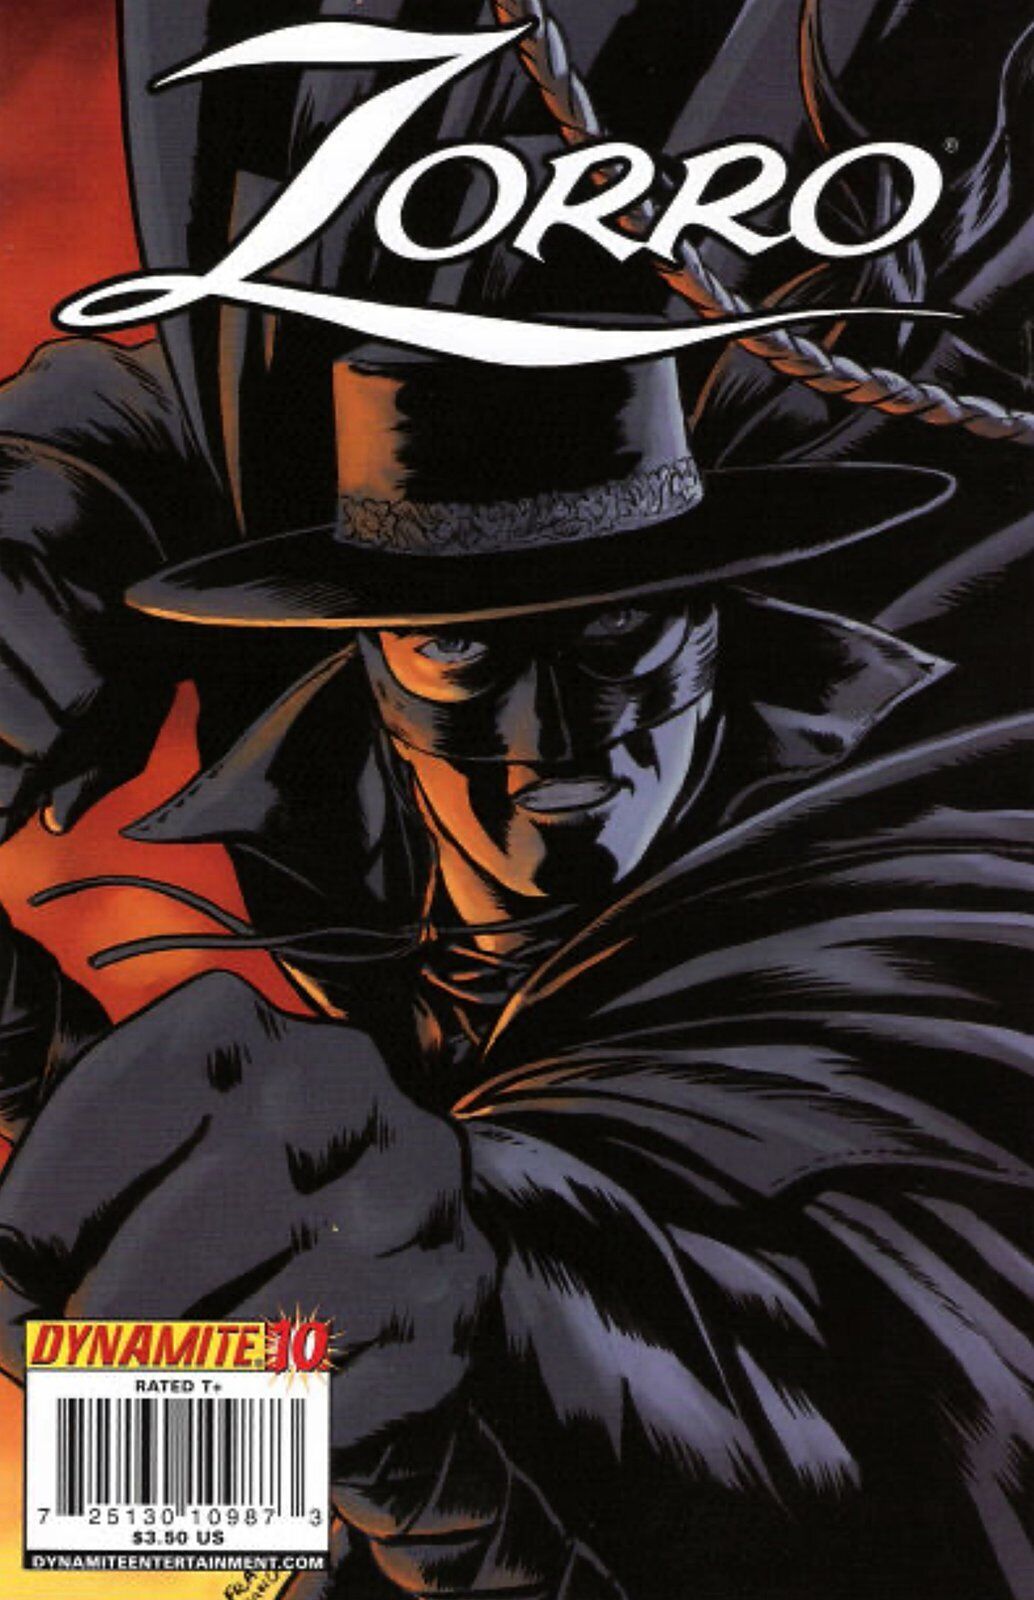 Zorro #10 Francesco Francavilla Cover (2008-2010) Dynamite Comics